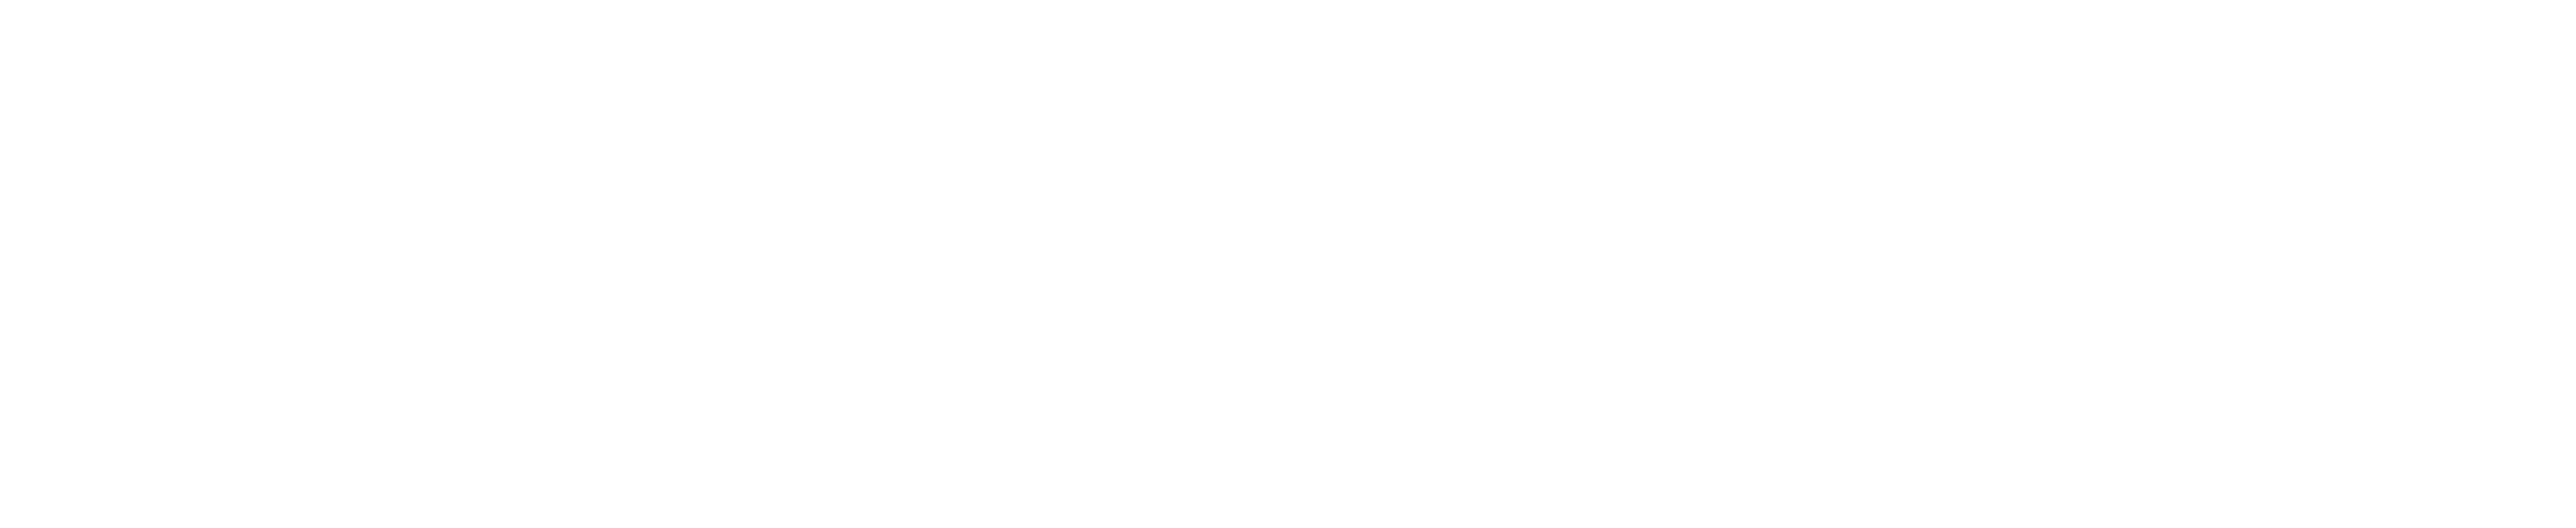 Wowie logo_2018_V1_RGB (1) (1)